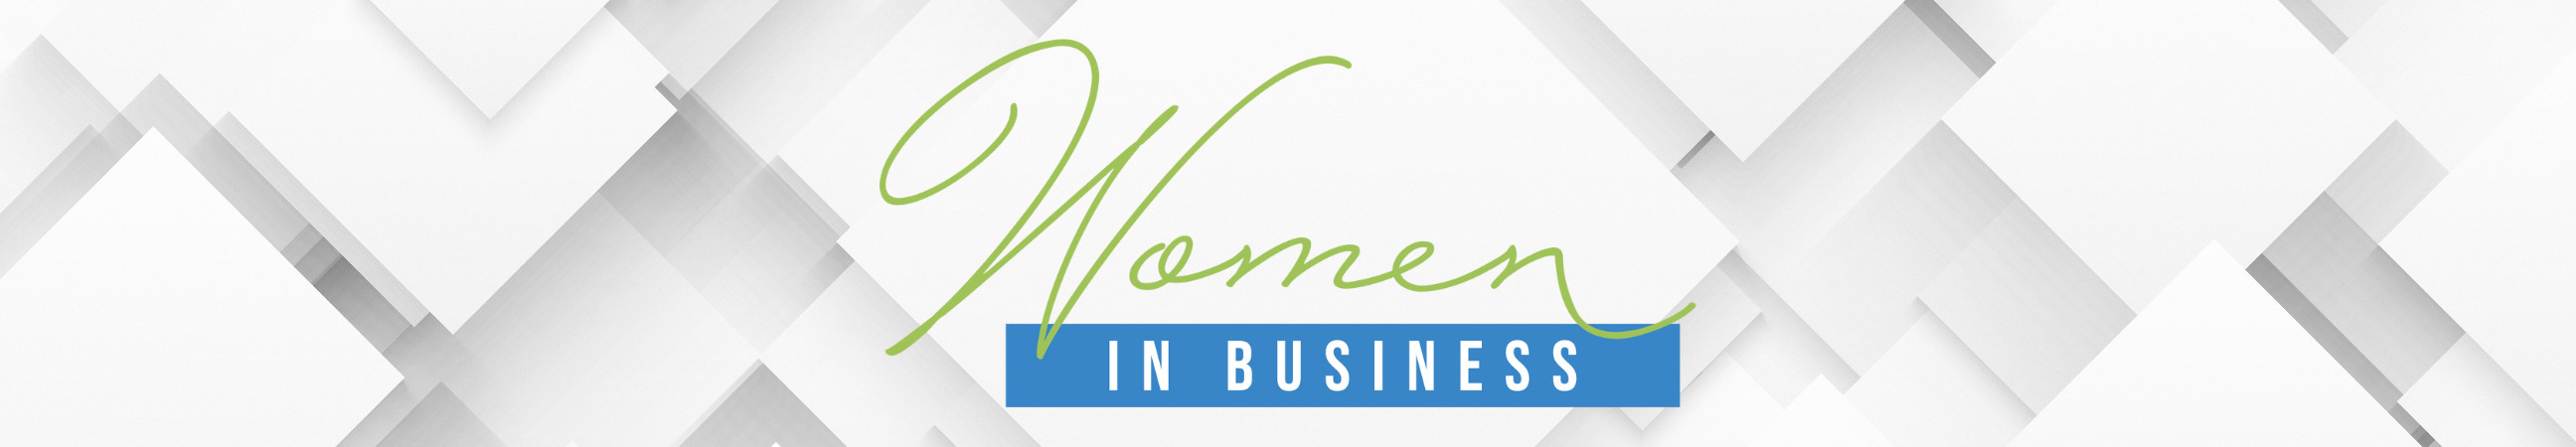 Women in Business Website Header (temp)